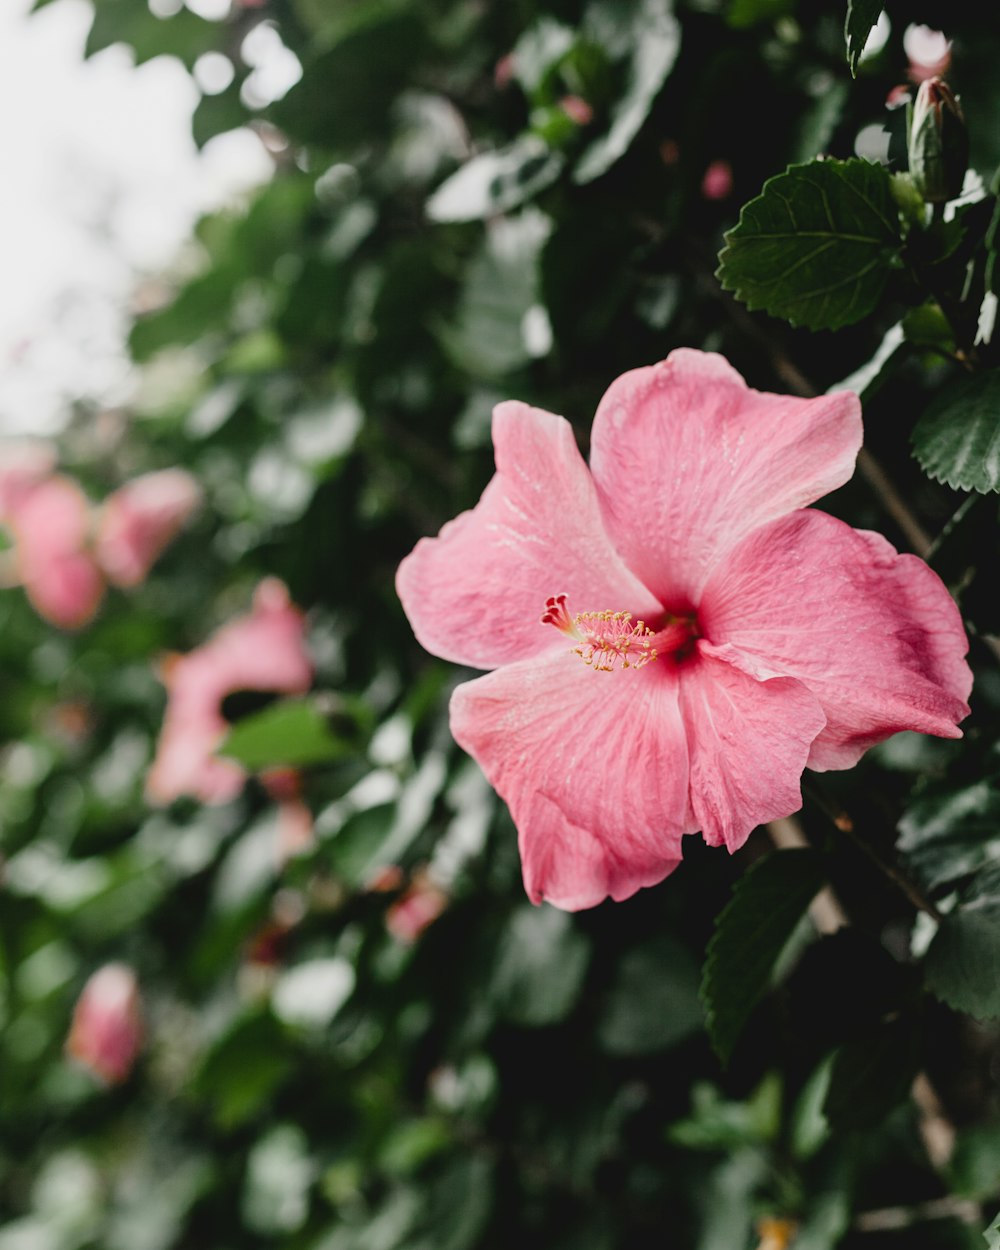 Plantas de hibisco rosa em fotografia de close-up